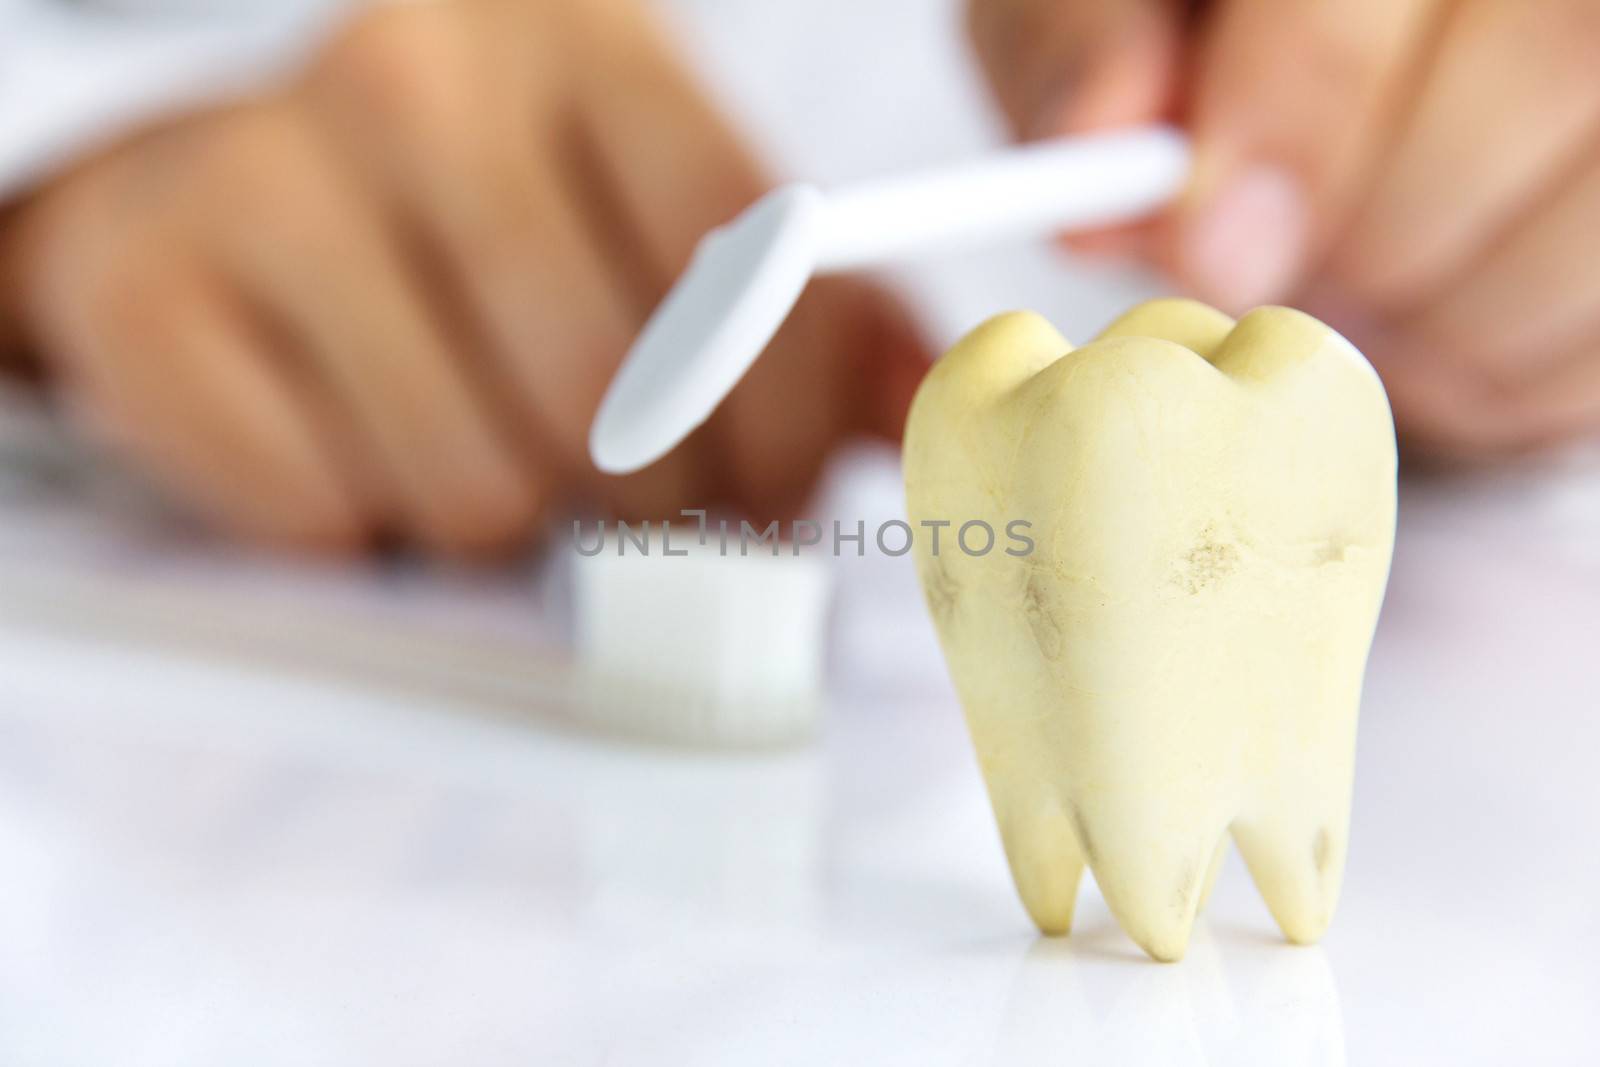 dentist holding dental Mirror, dental hygiene concept